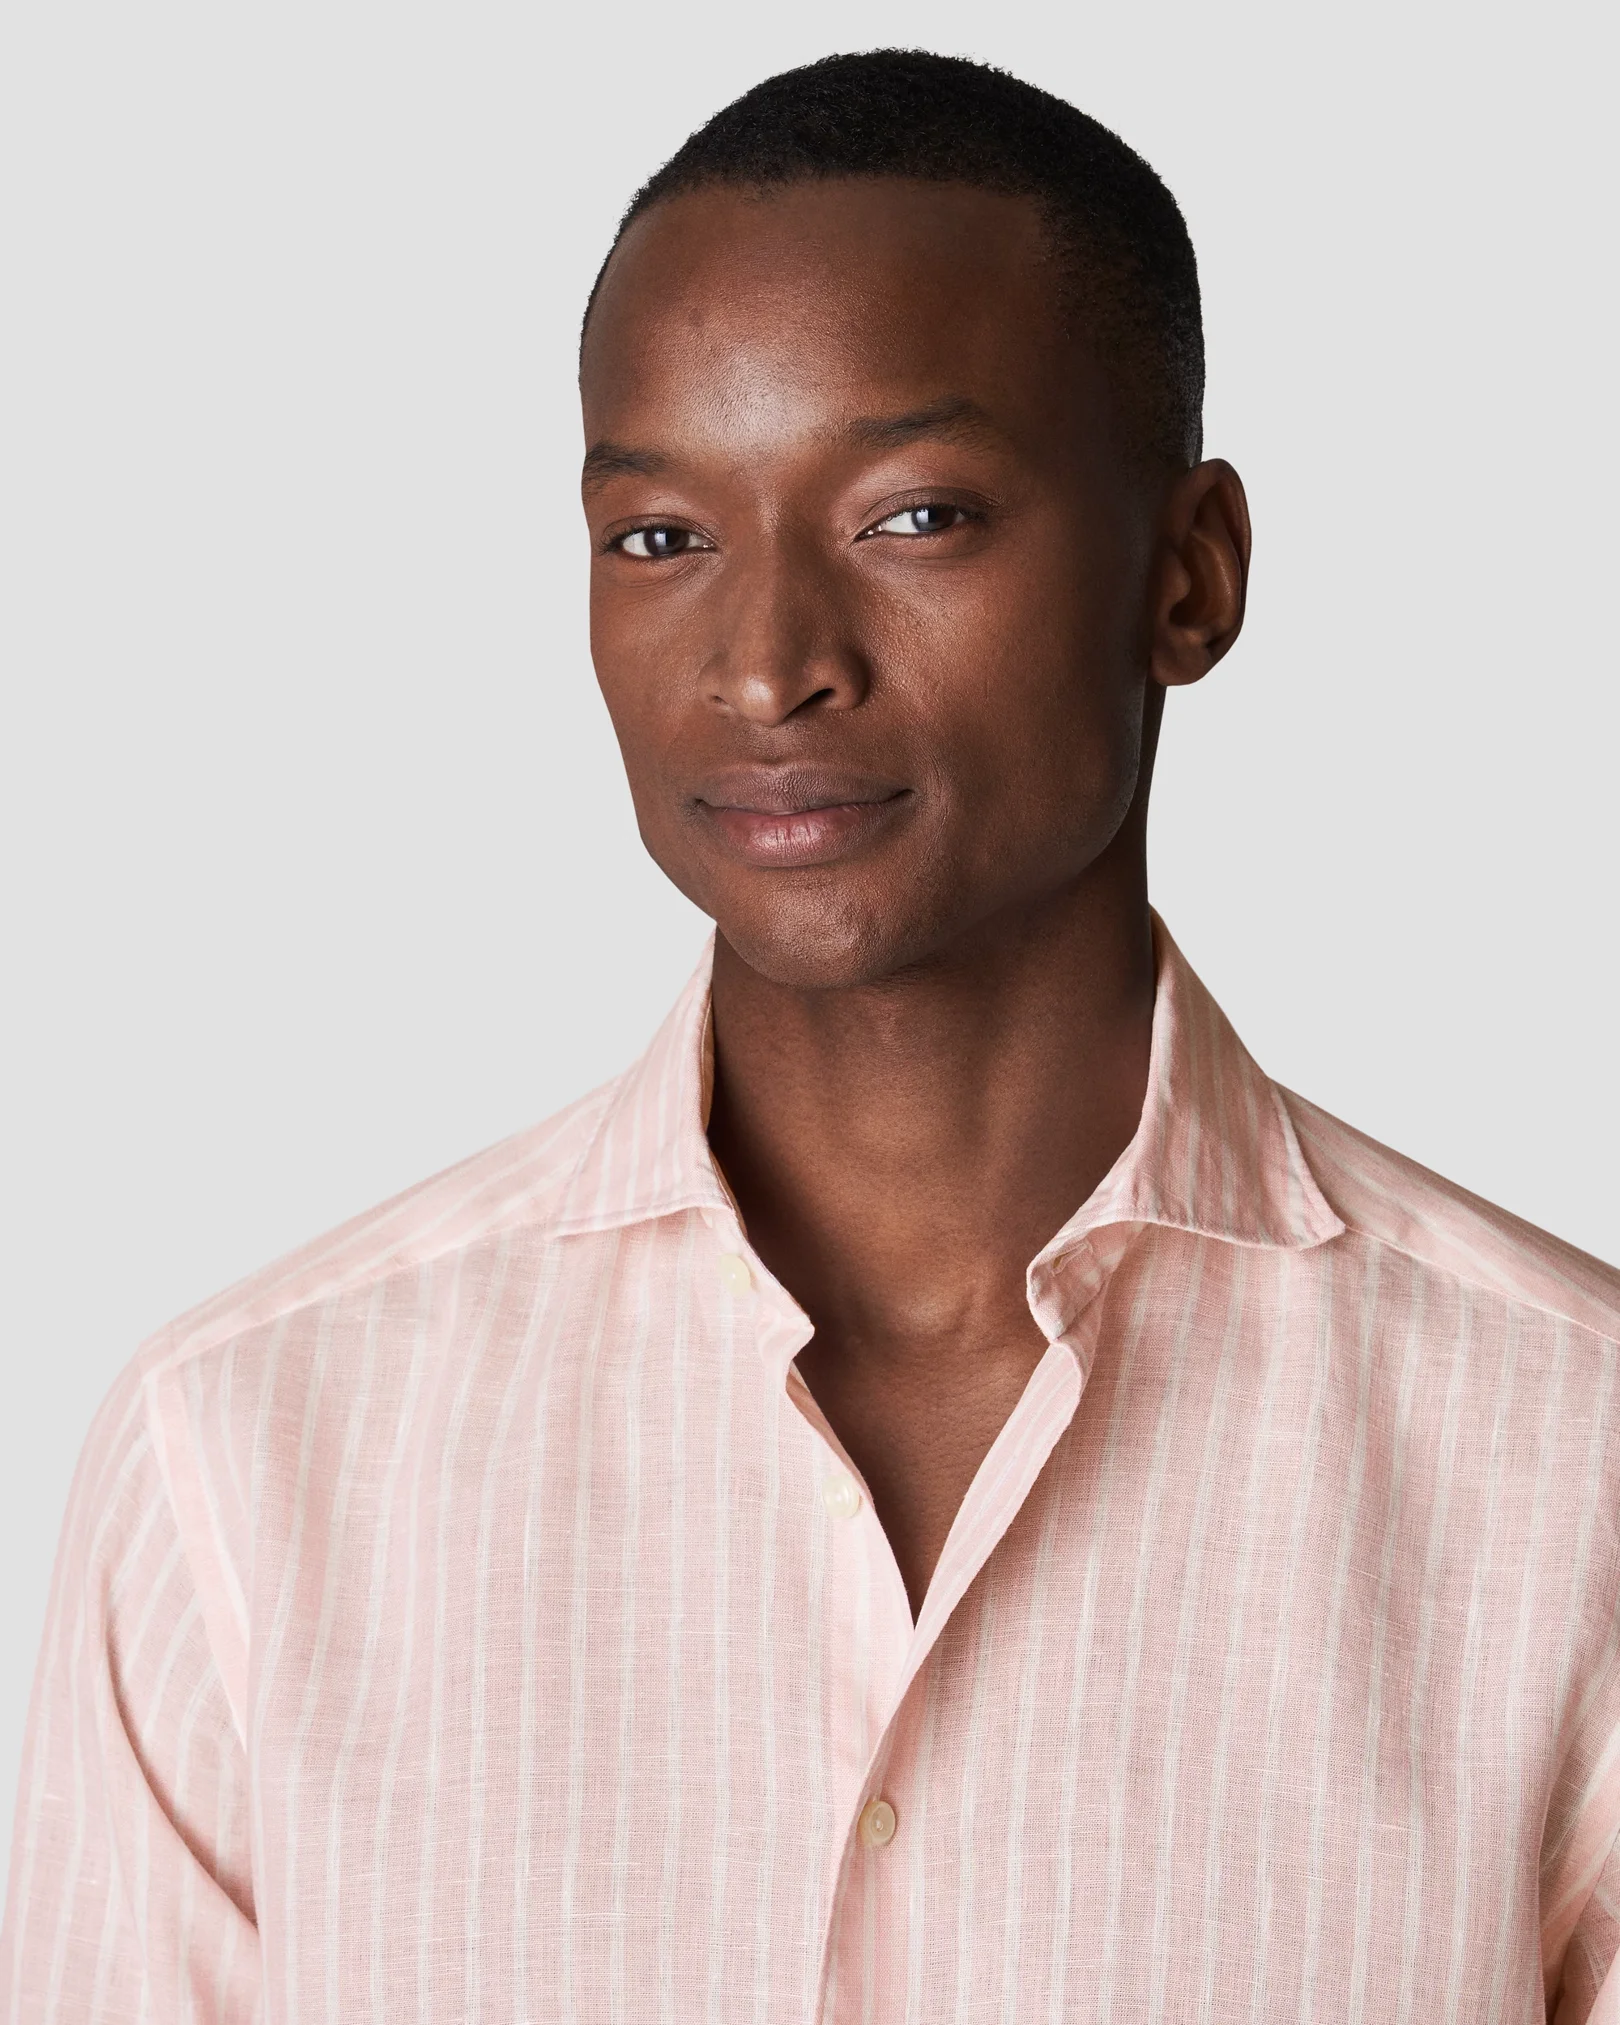 Eton - pink striped linen shirt